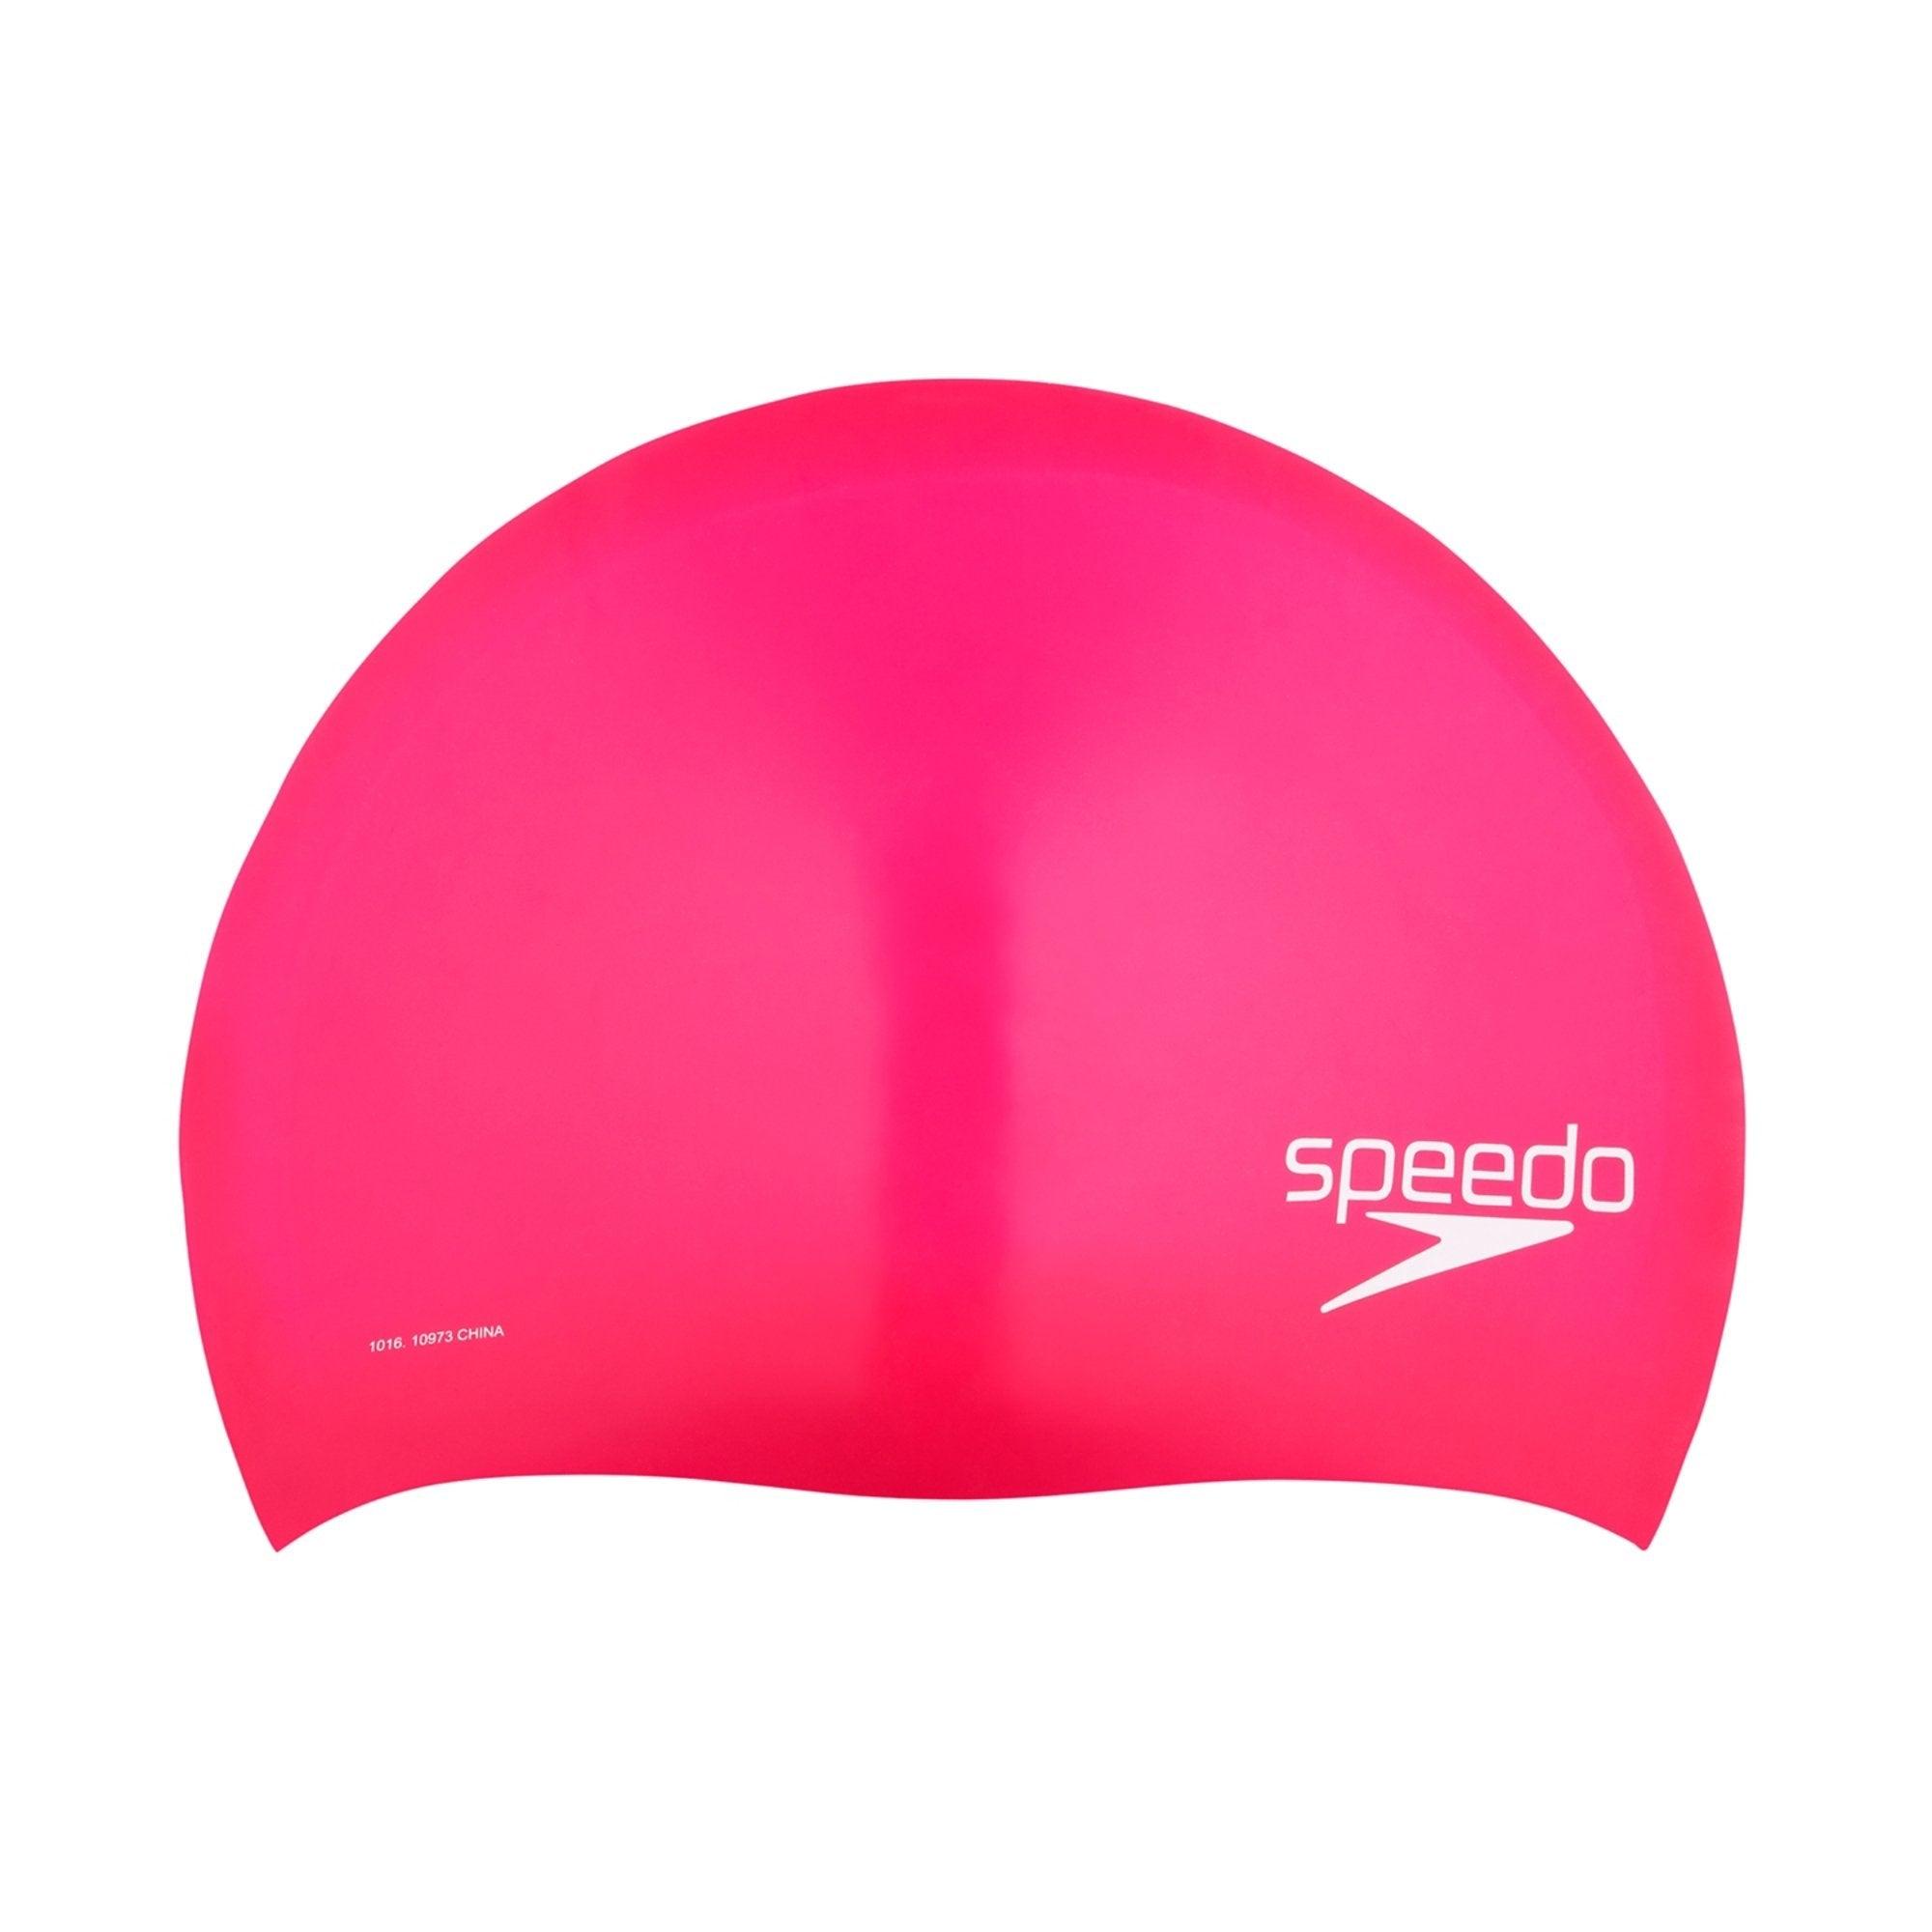 Speedo Long Hair Silicone Swim Cap